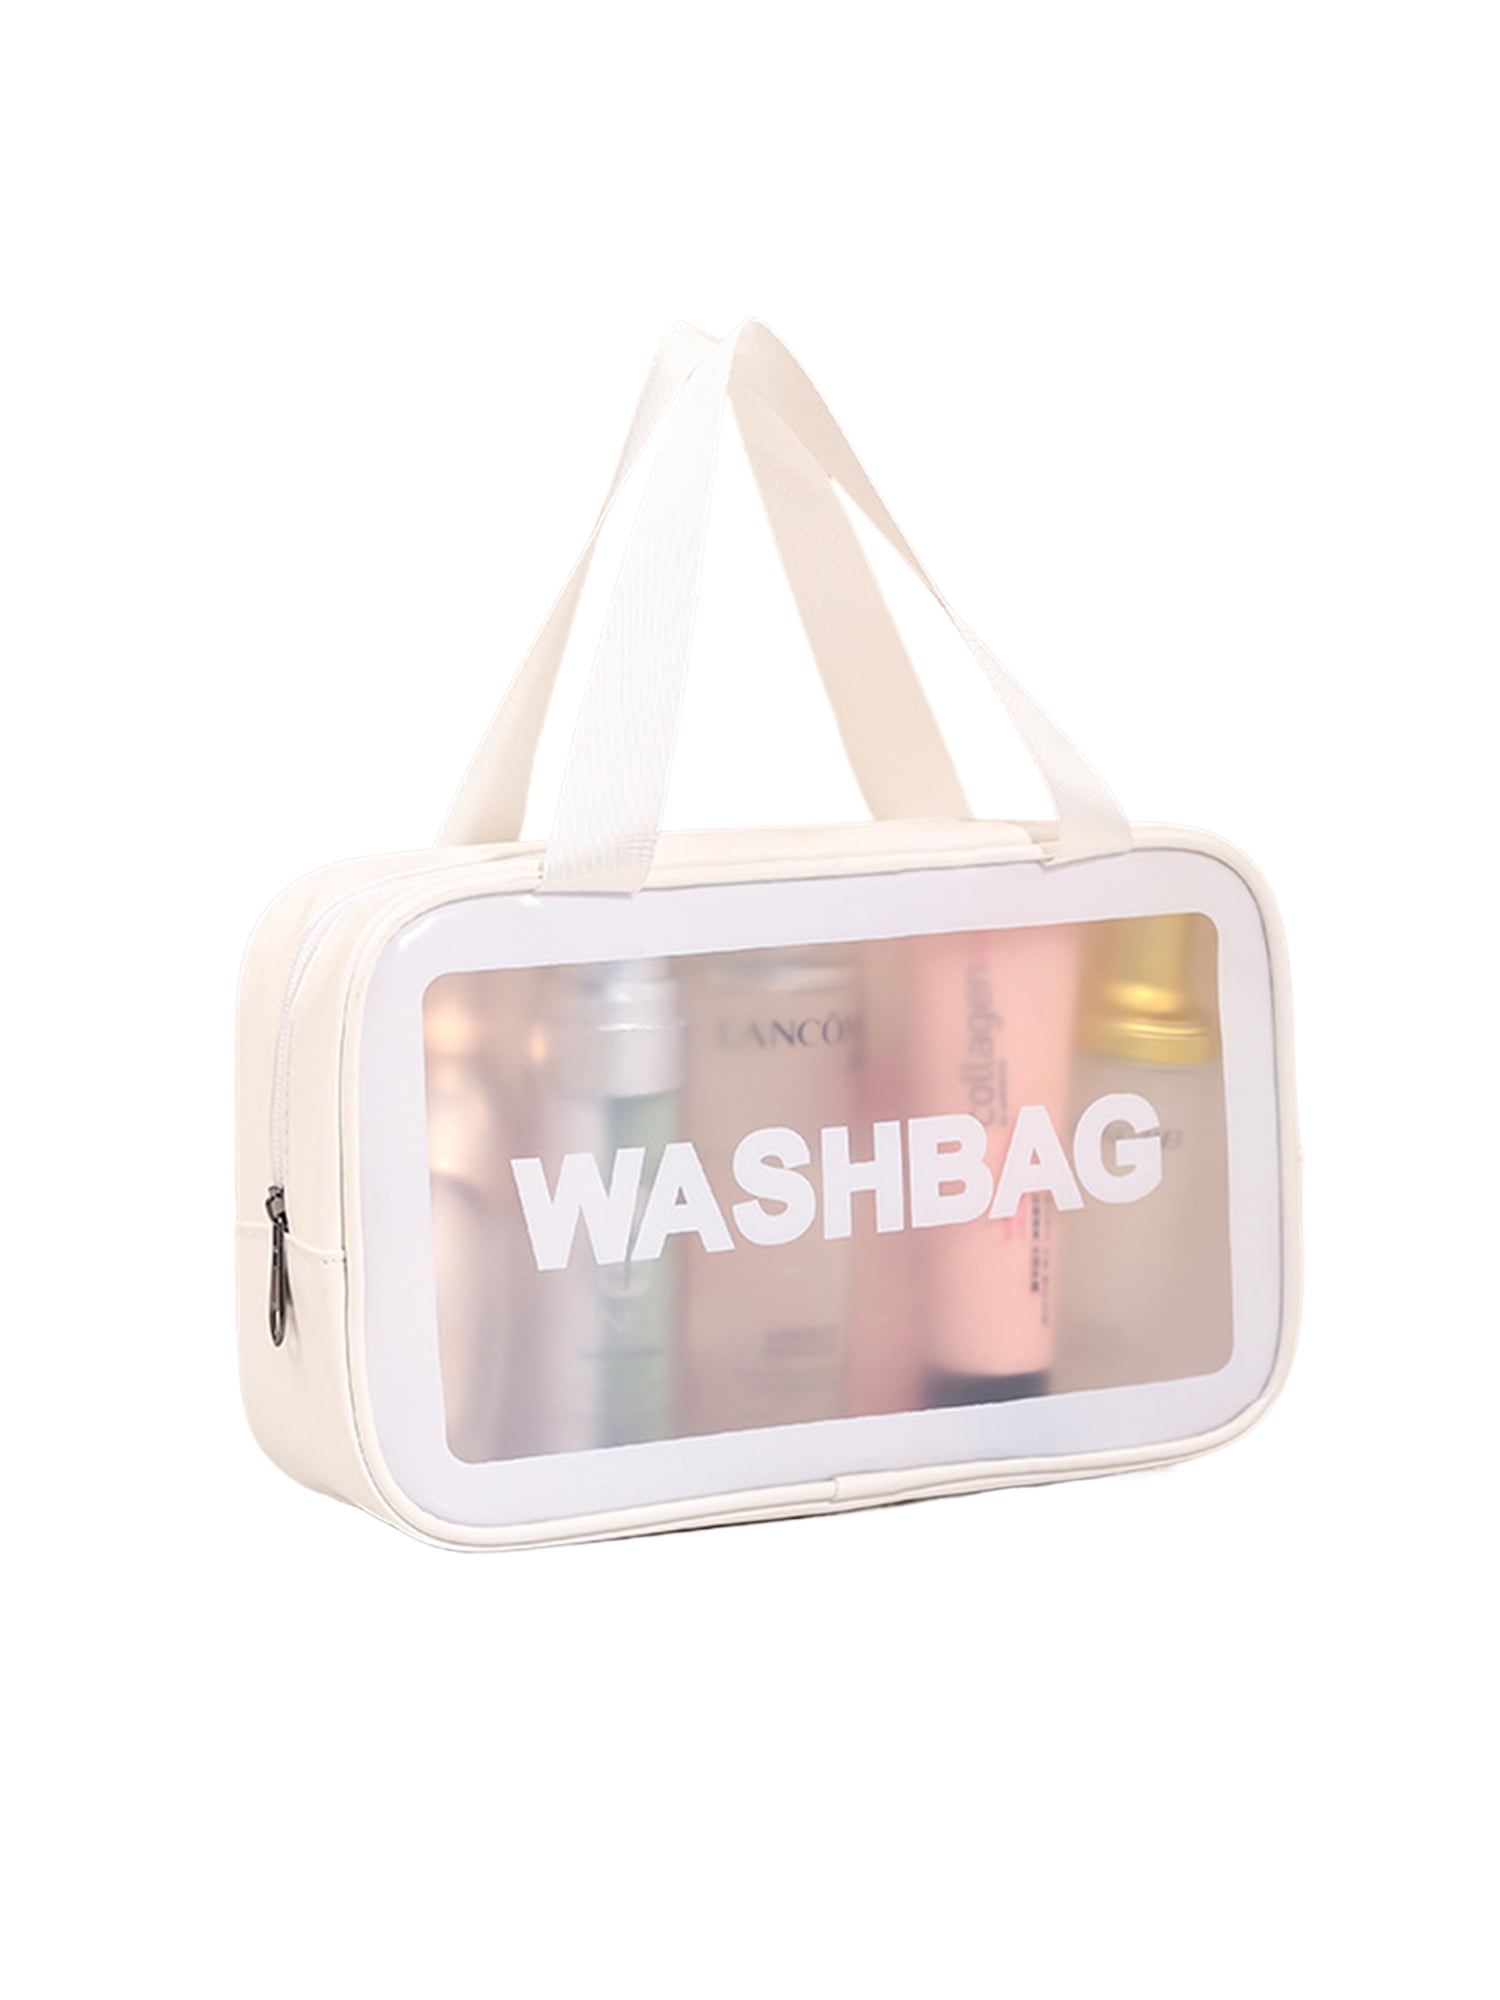  SAOQI Clear Makeup Bags, Waterproof Large Cosmetic Bags for  Women Travel Toiletry Bag, Clear Makeup Organizer Bag with Zipper, Transparent  MakeUp Case, Clear Toiletry Bags for Traveling, Gift for Wife 